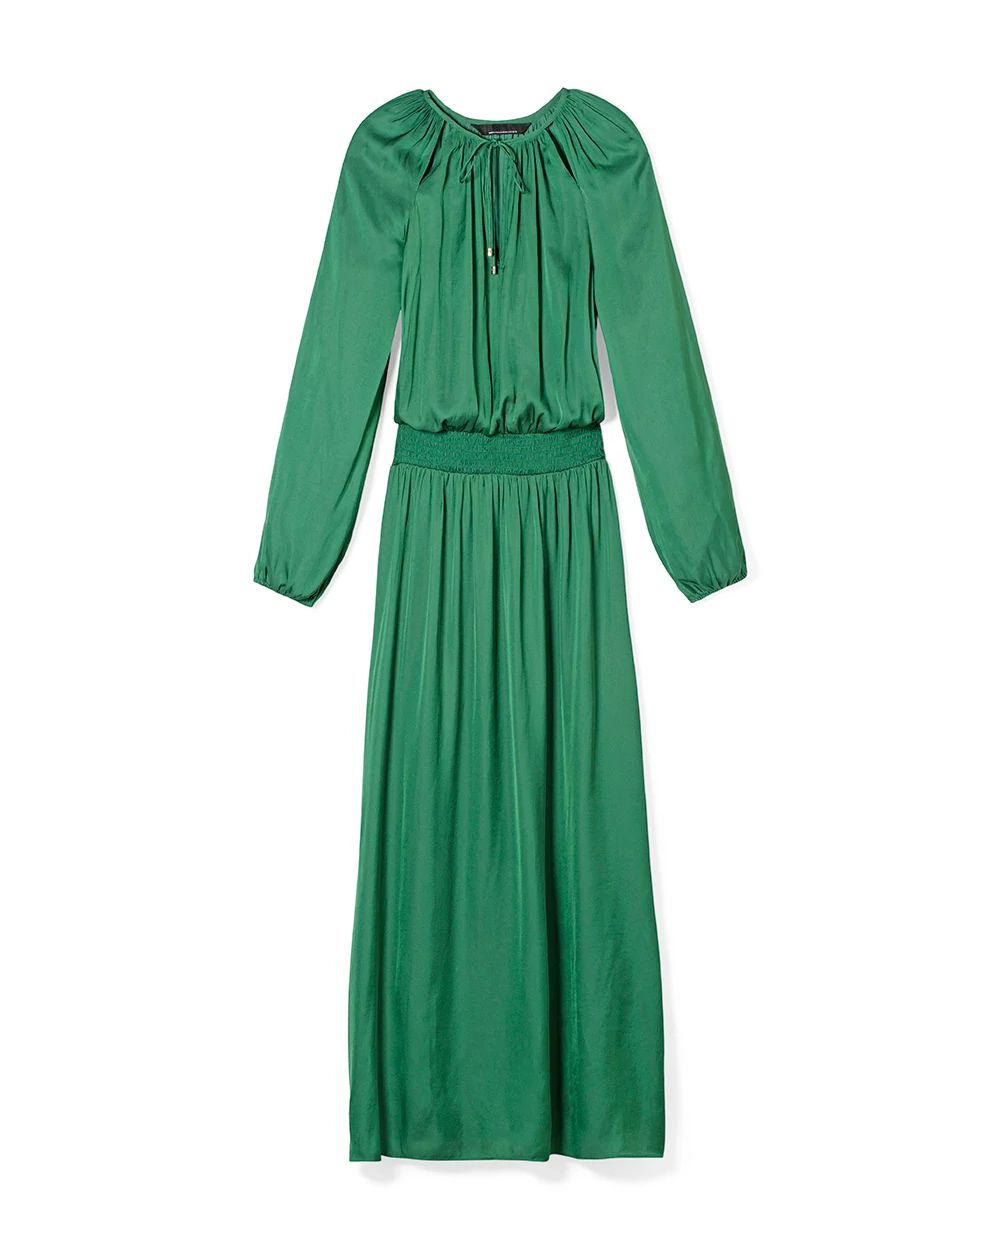 Long-Sleeve Smocked Waist Satin Midi Dress click to view larger image.